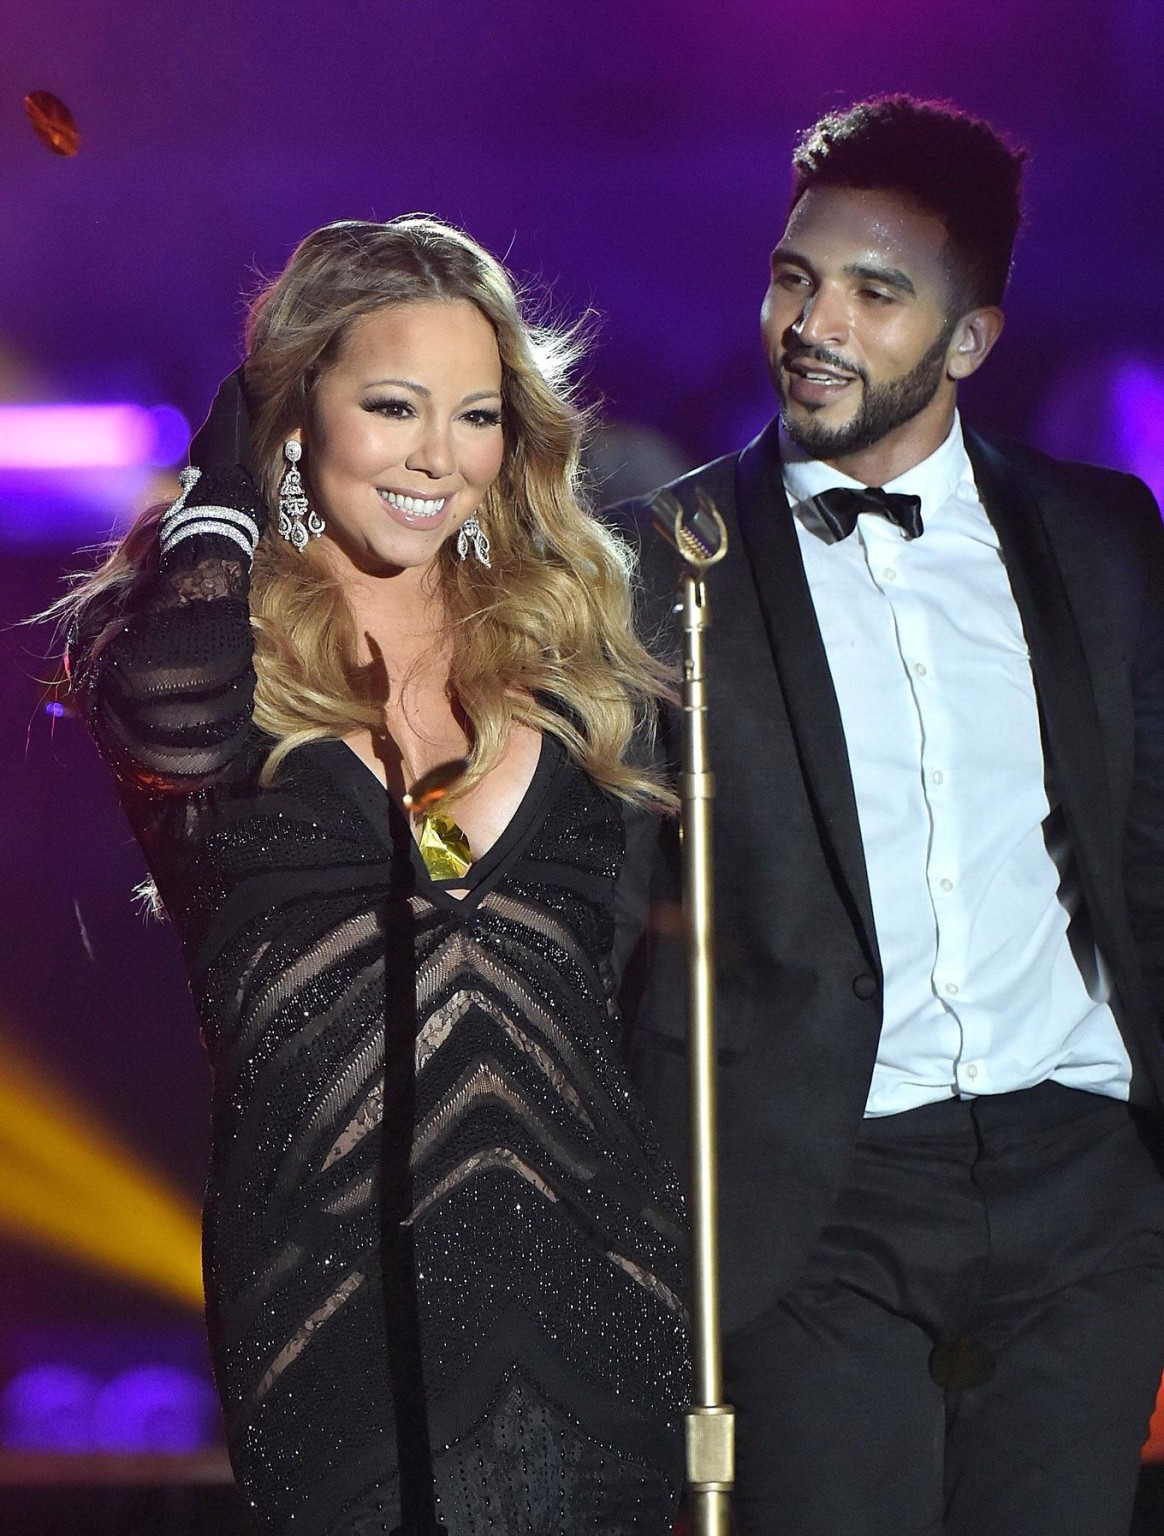 Mariah carey cleavy indossando due abiti succinti al world music awards in mont
 #75195161